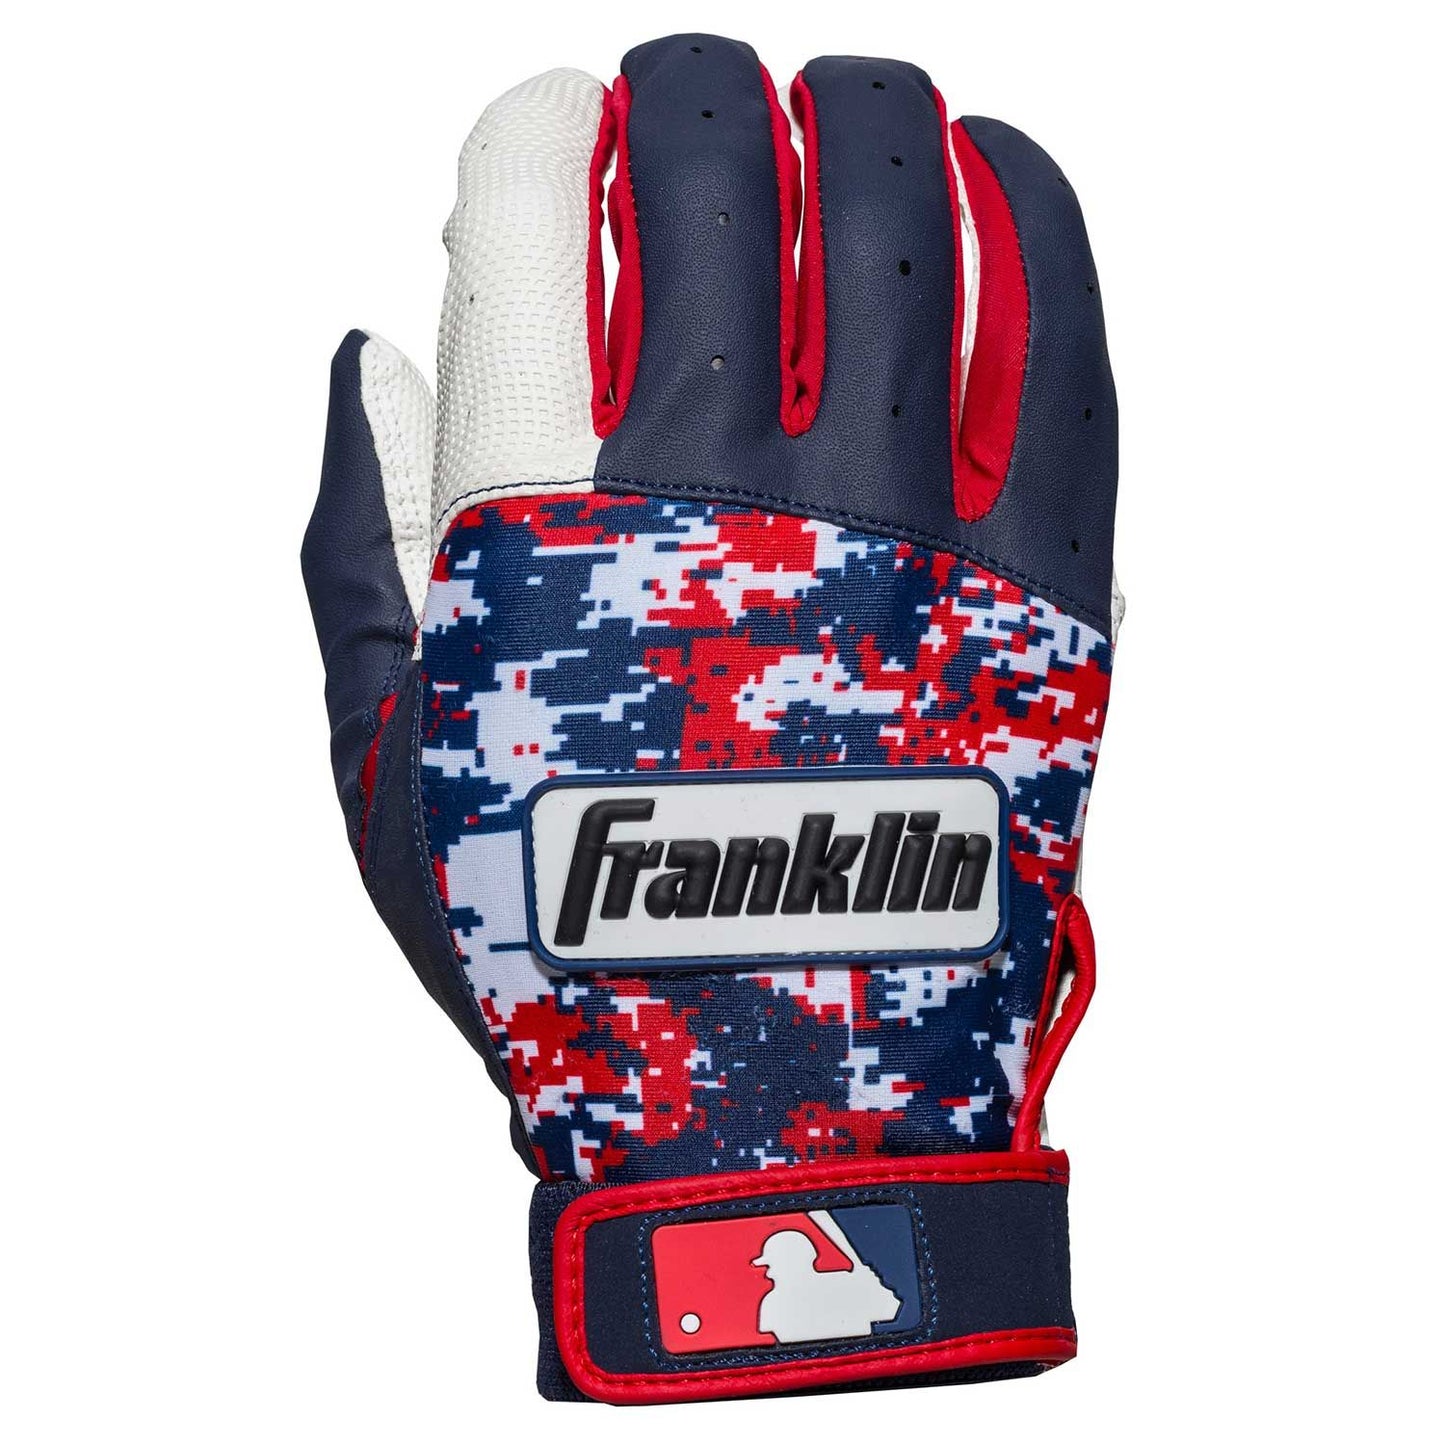 Franklin New Baseball Batting Gloves Size Youth Small Medium Large Red Digitek Joey Gallo